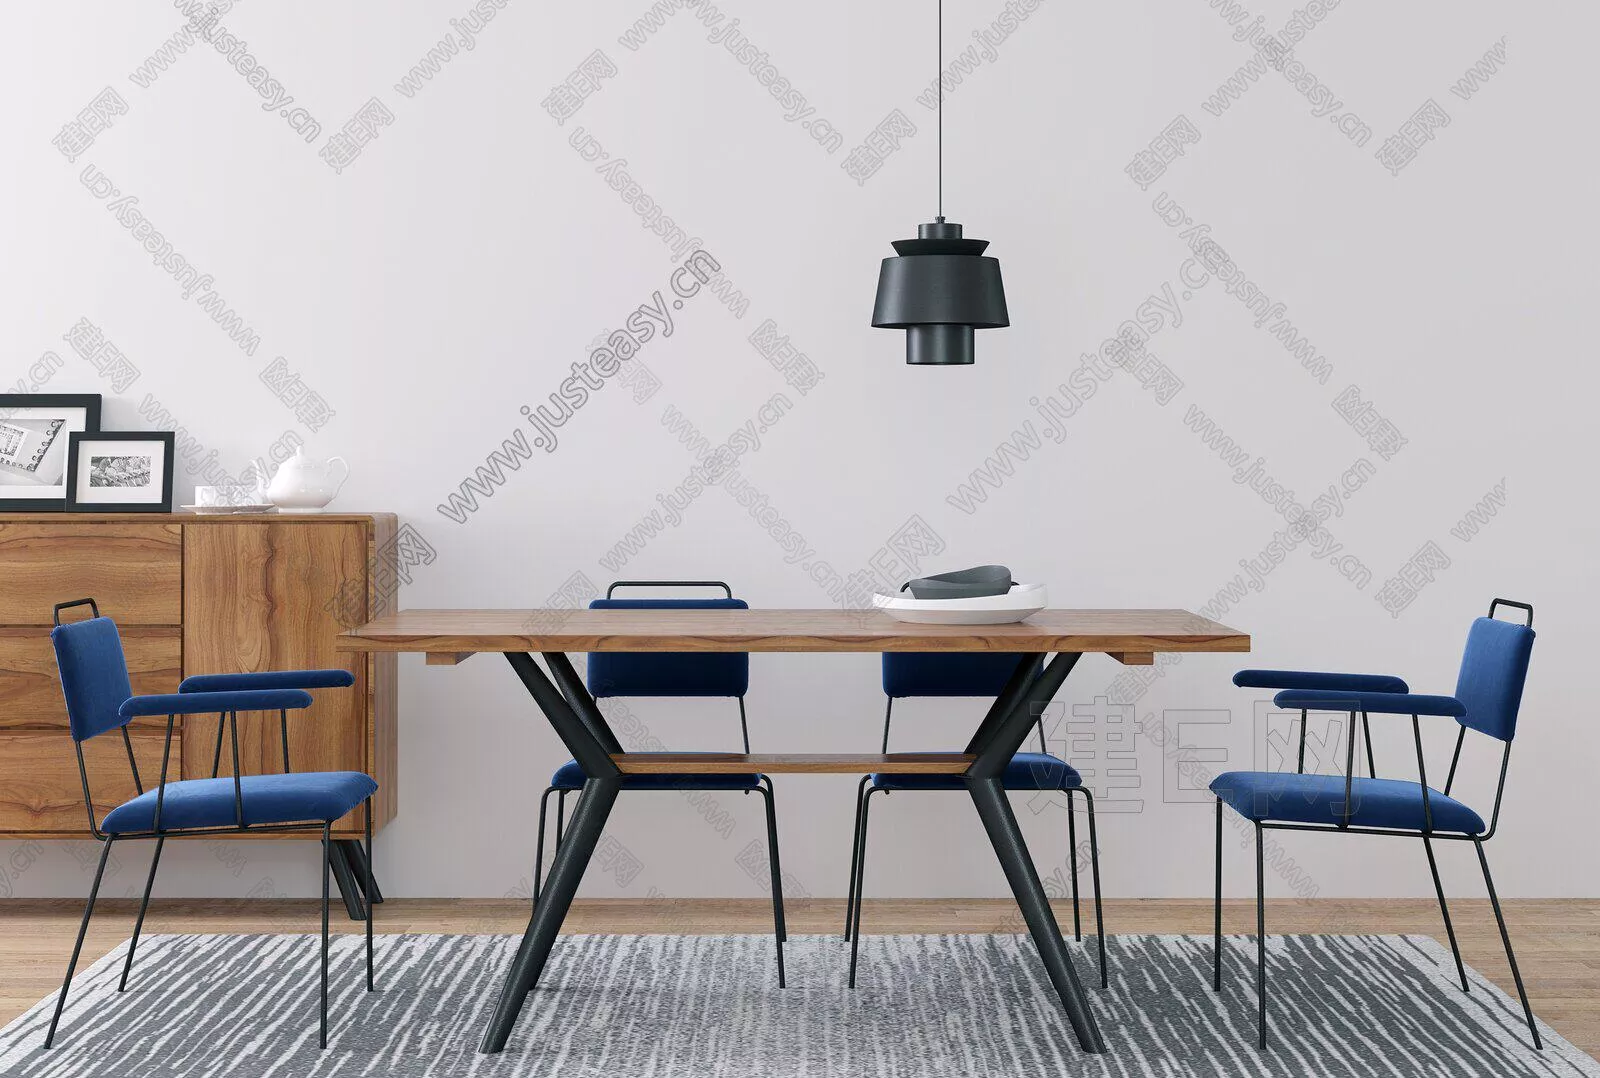 NORDIC DINING TABLE SET - SKETCHUP 3D MODEL - ENSCAPE - 111234479